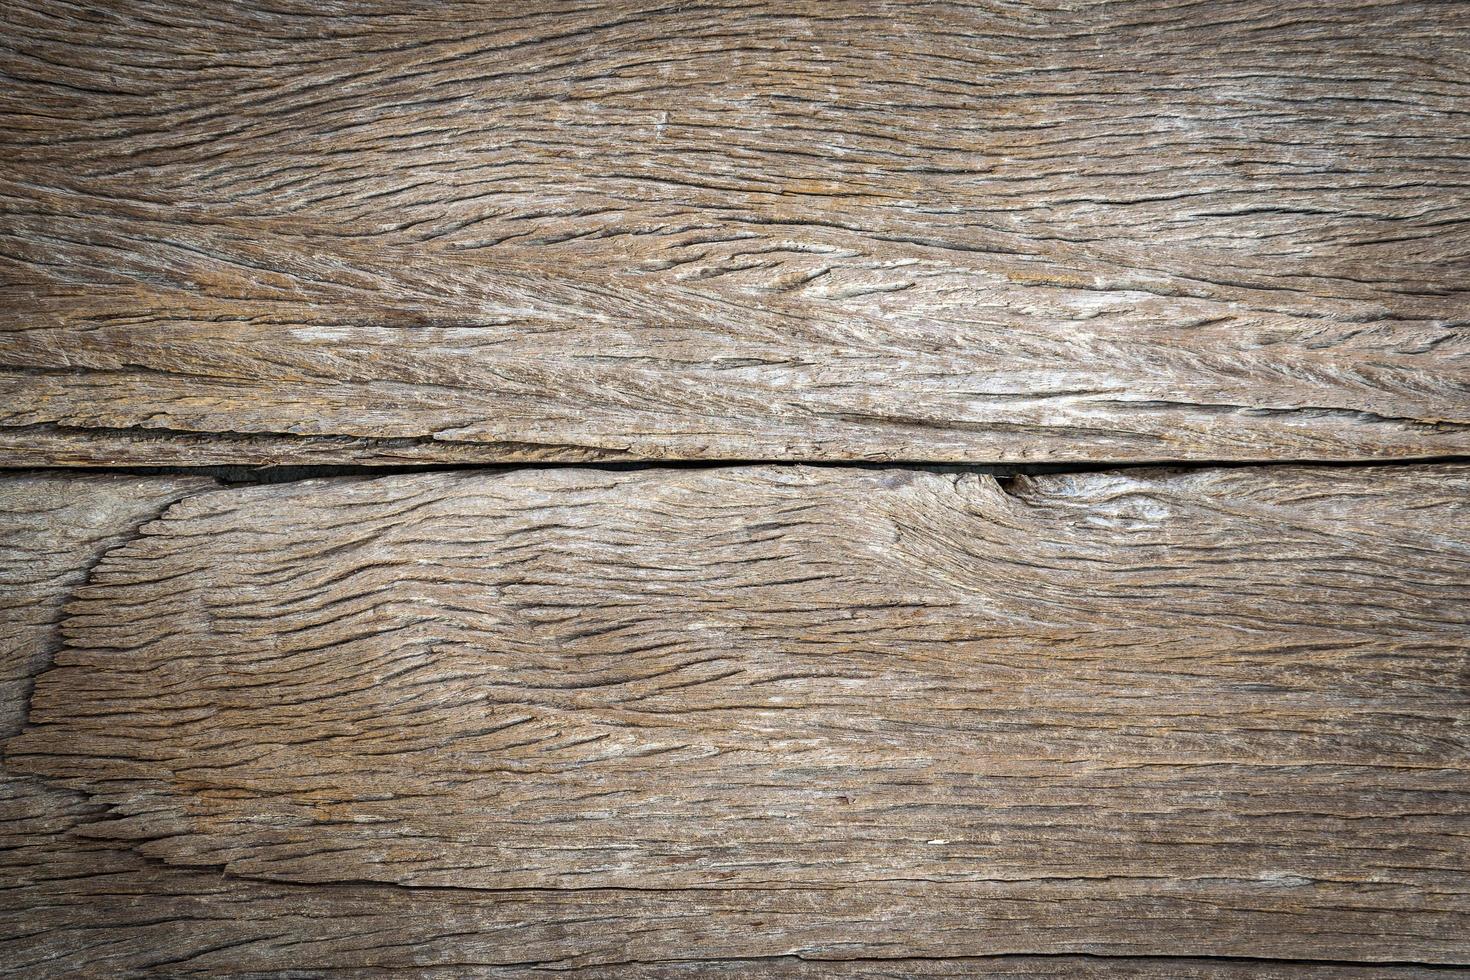 textura de madera de fondo foto